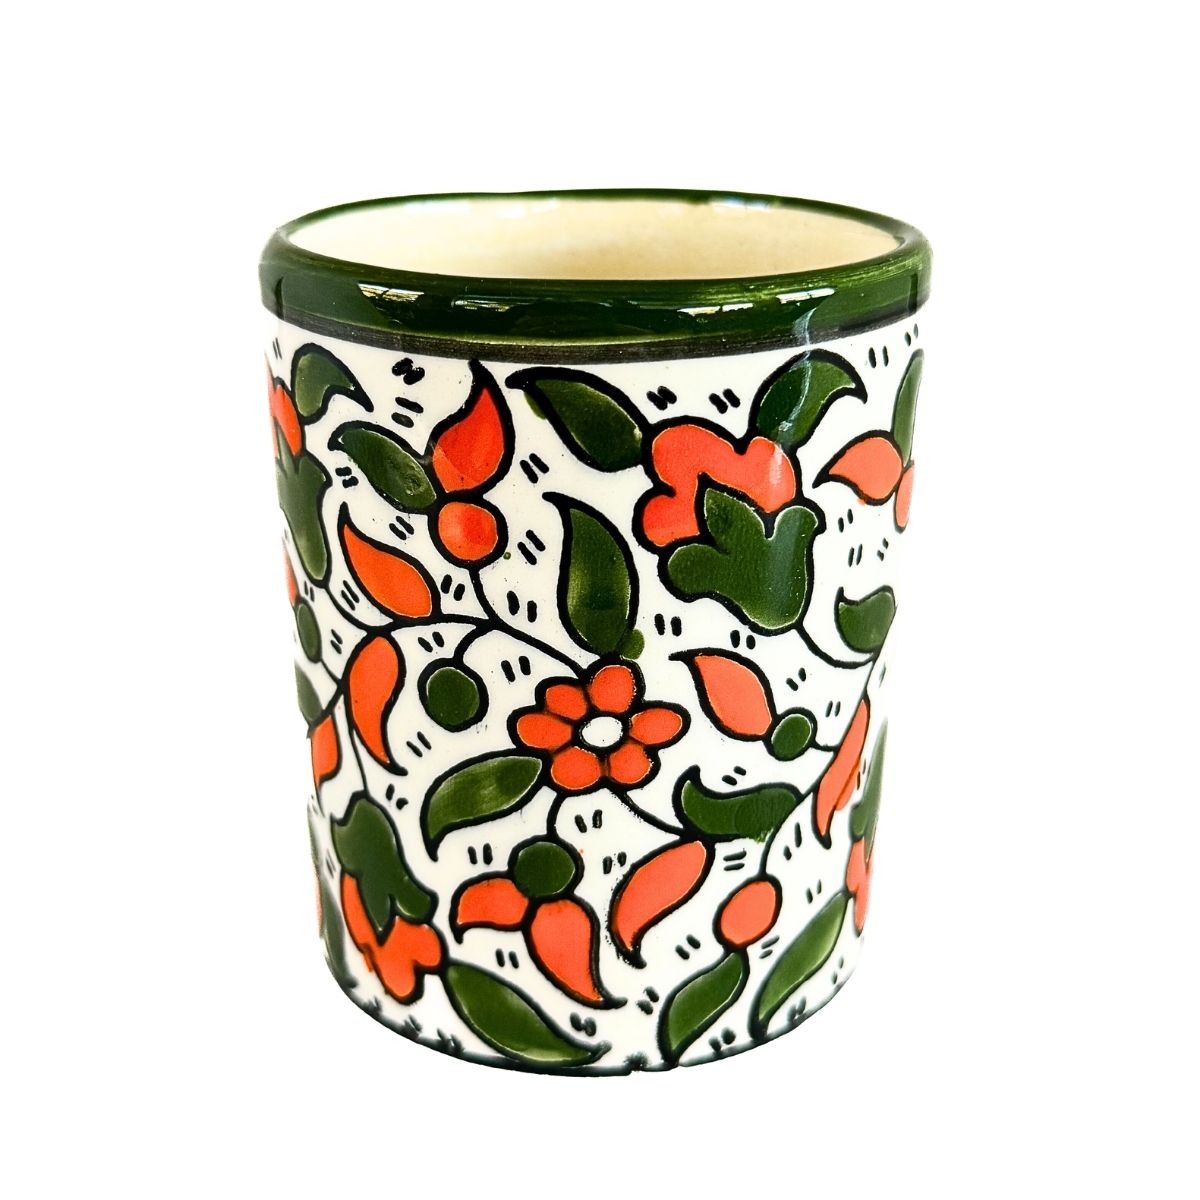 Ceramic Mug, No Handle - Green & Orange